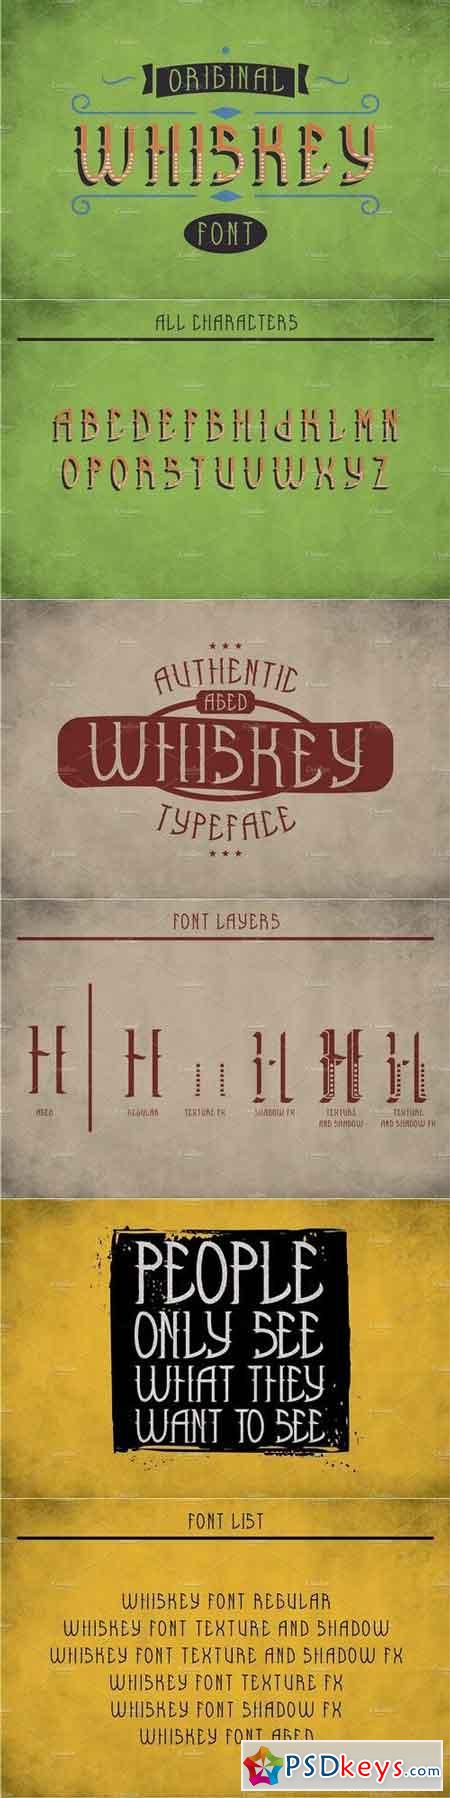 Whiskey Original Label Typeface 1811946